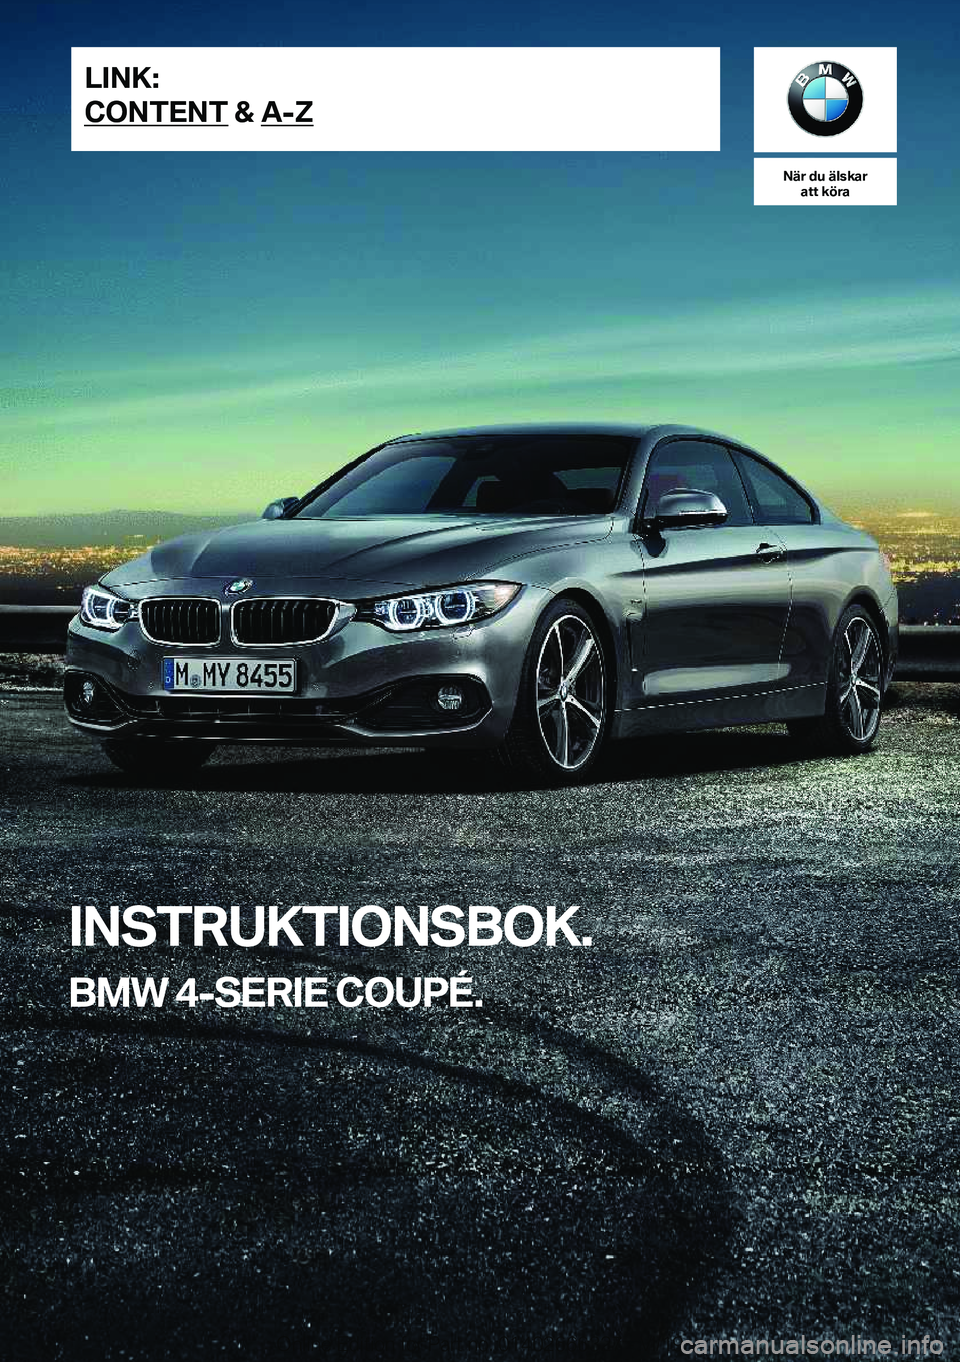 BMW 4 SERIES COUPE 2020  InstruktionsbÖcker (in Swedish) �N�ä�r��d�u��ä�l�s�k�a�r�a�t�t��k�